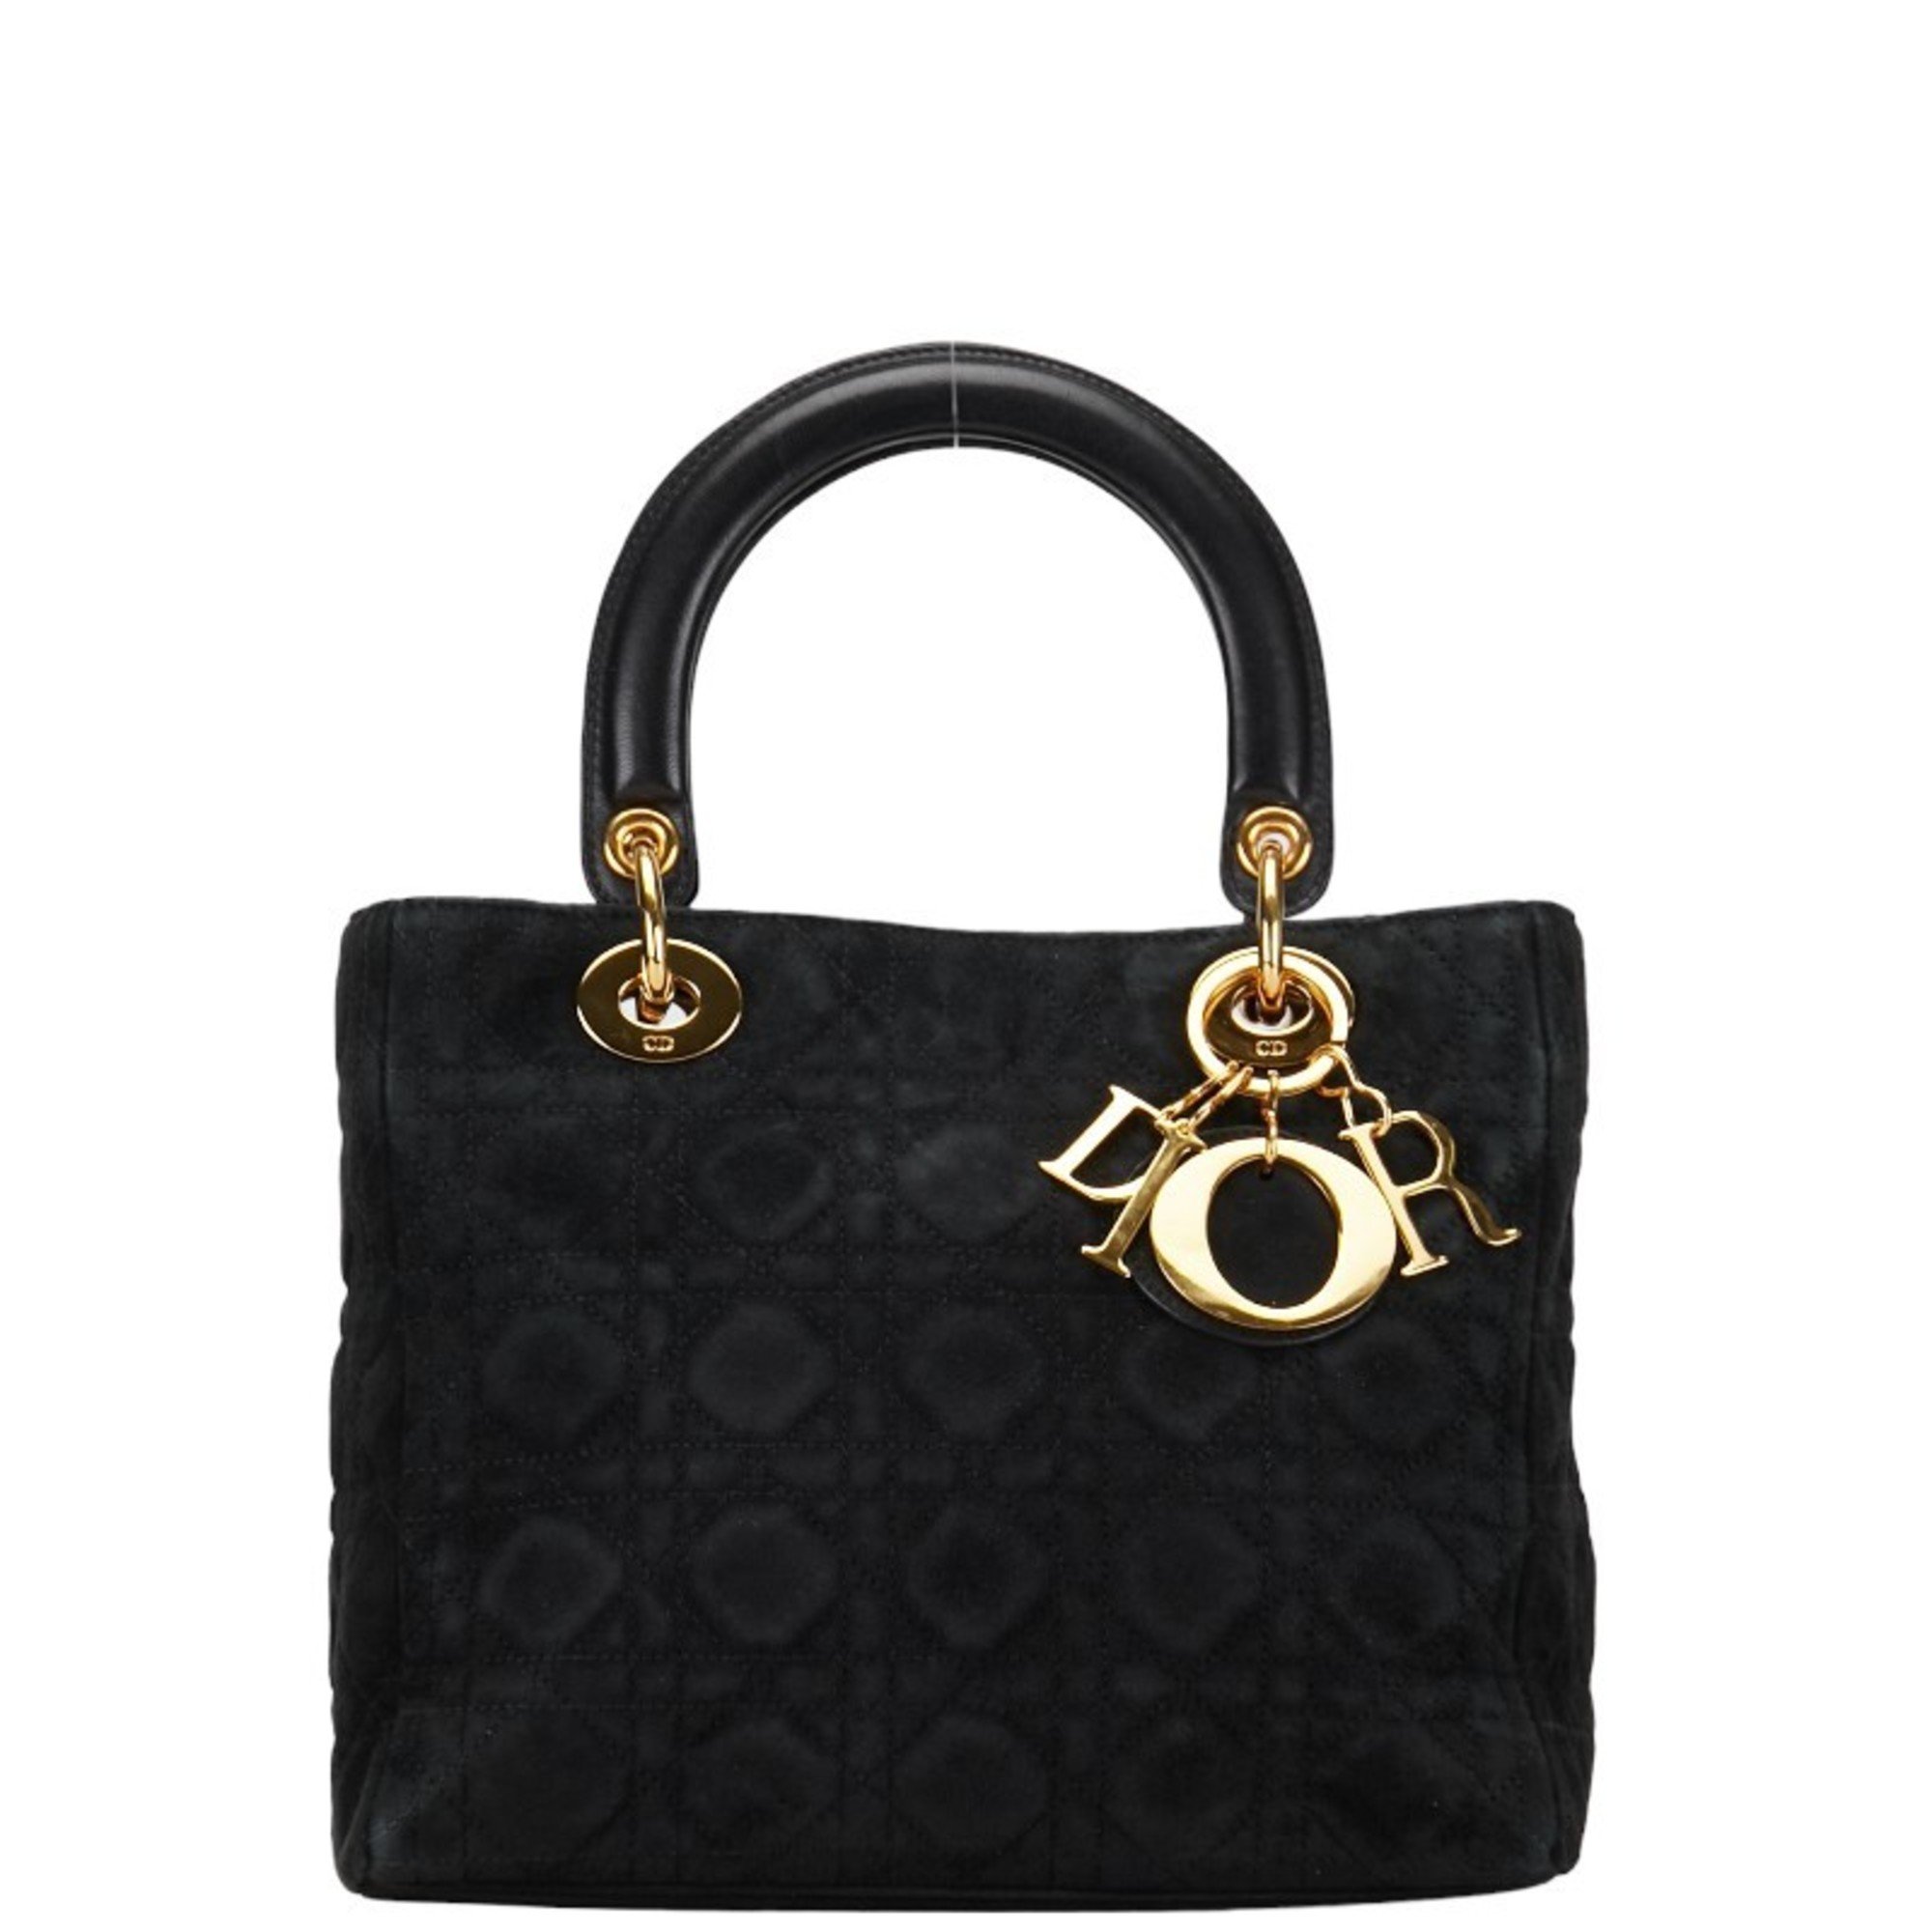 Christian Dior Dior Lady Handbag Black Gold Suede Leather Women's